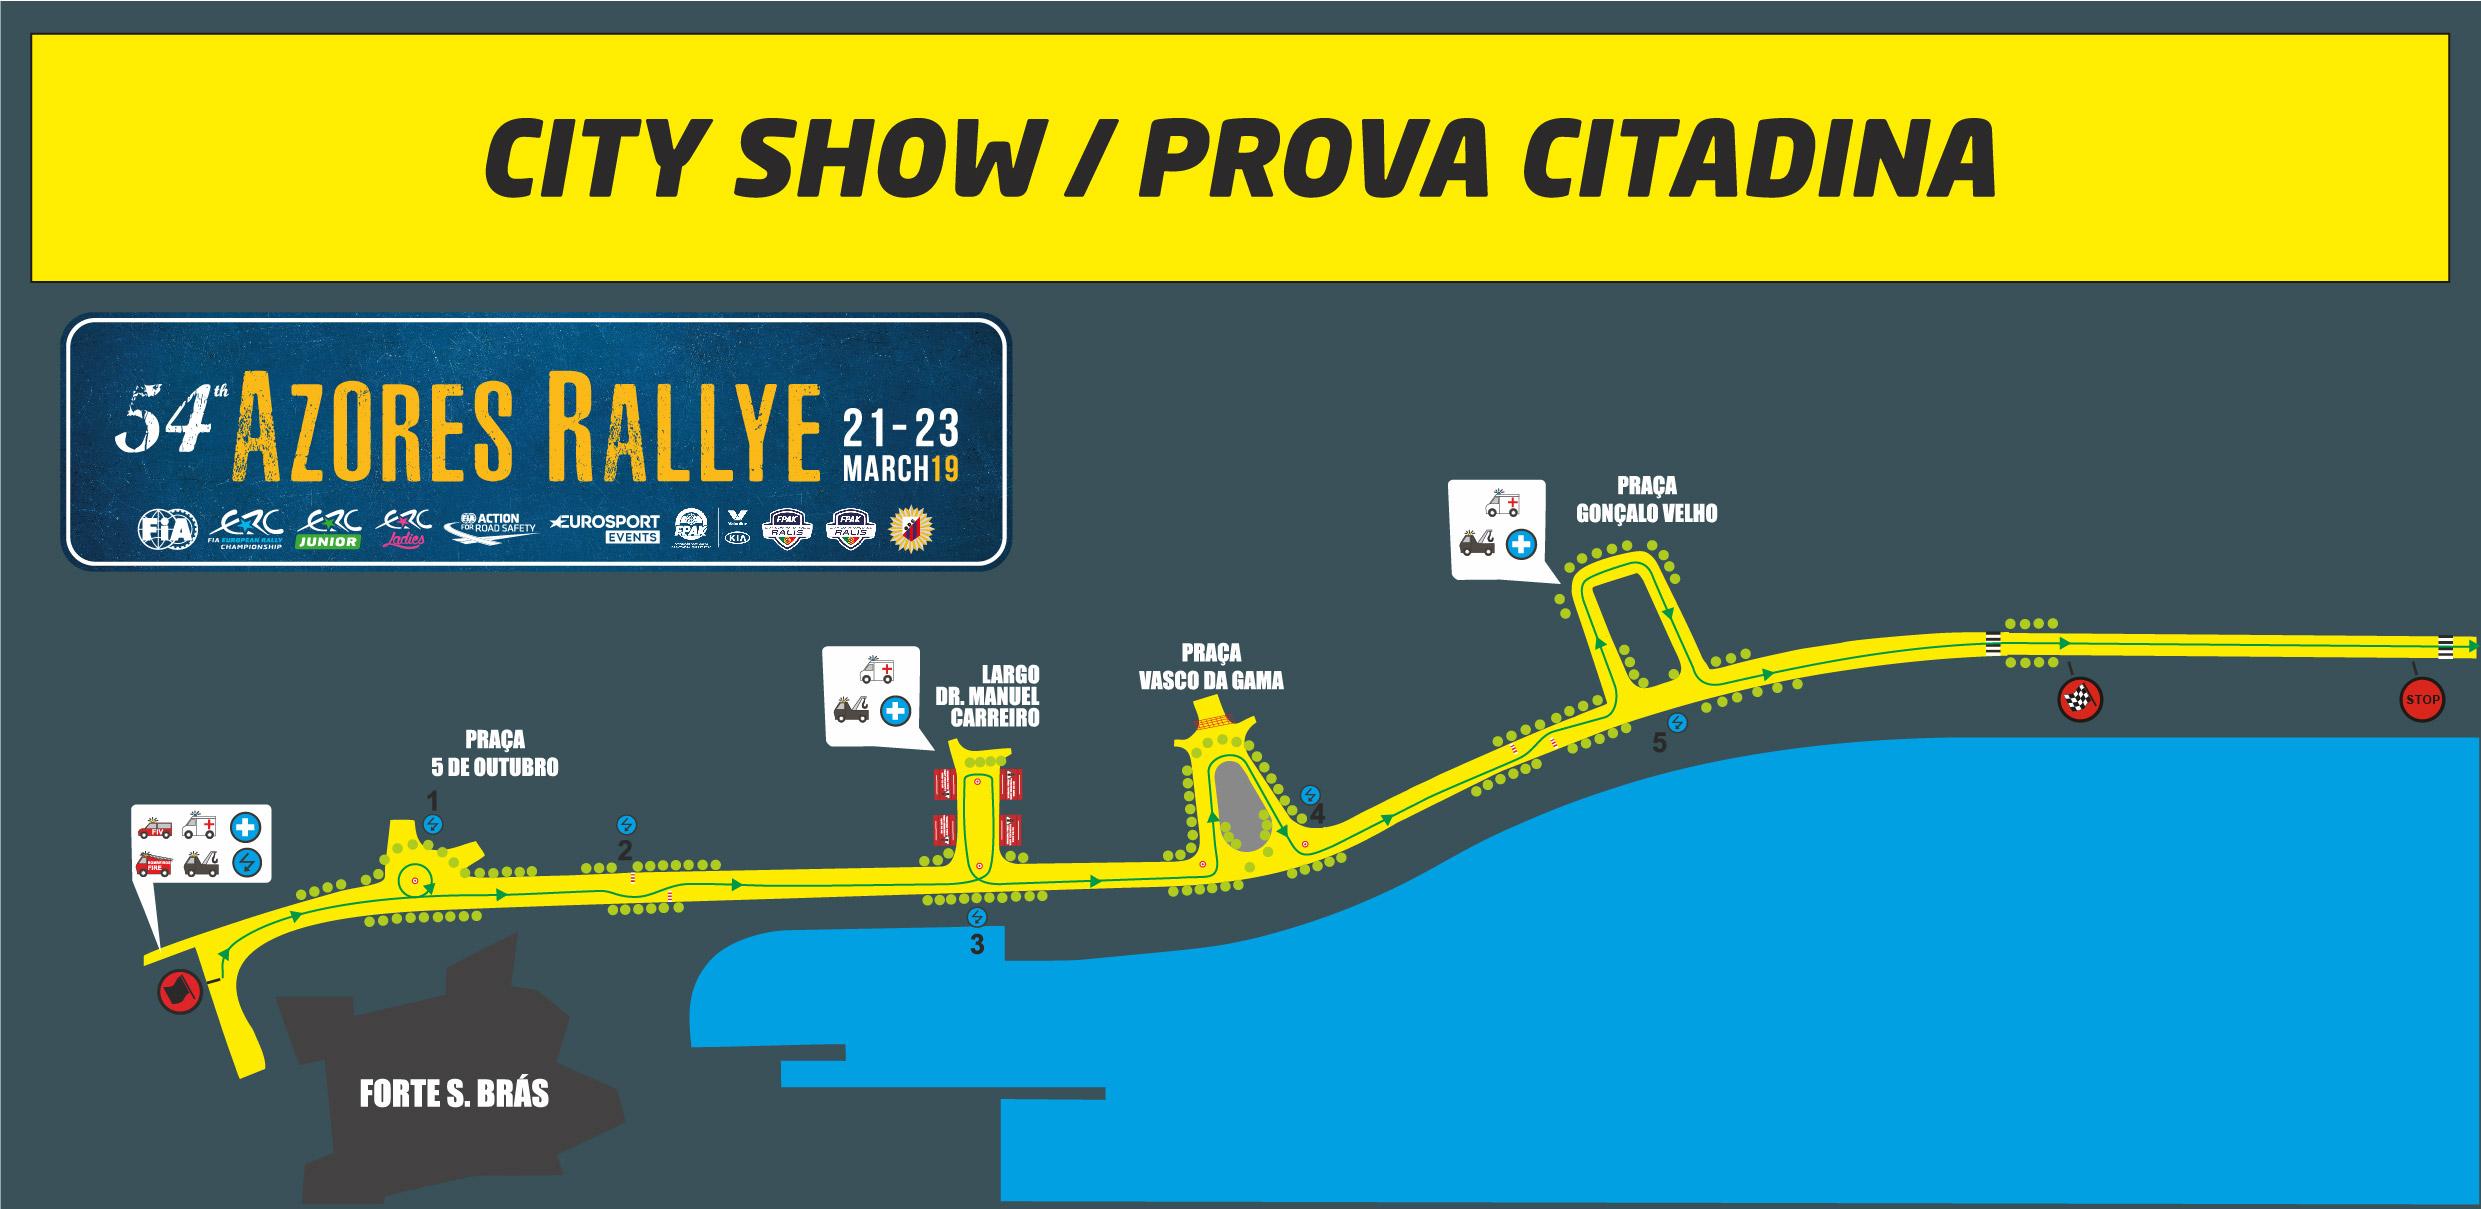 City Show - Prova Citadina - Azores Rallye 2019